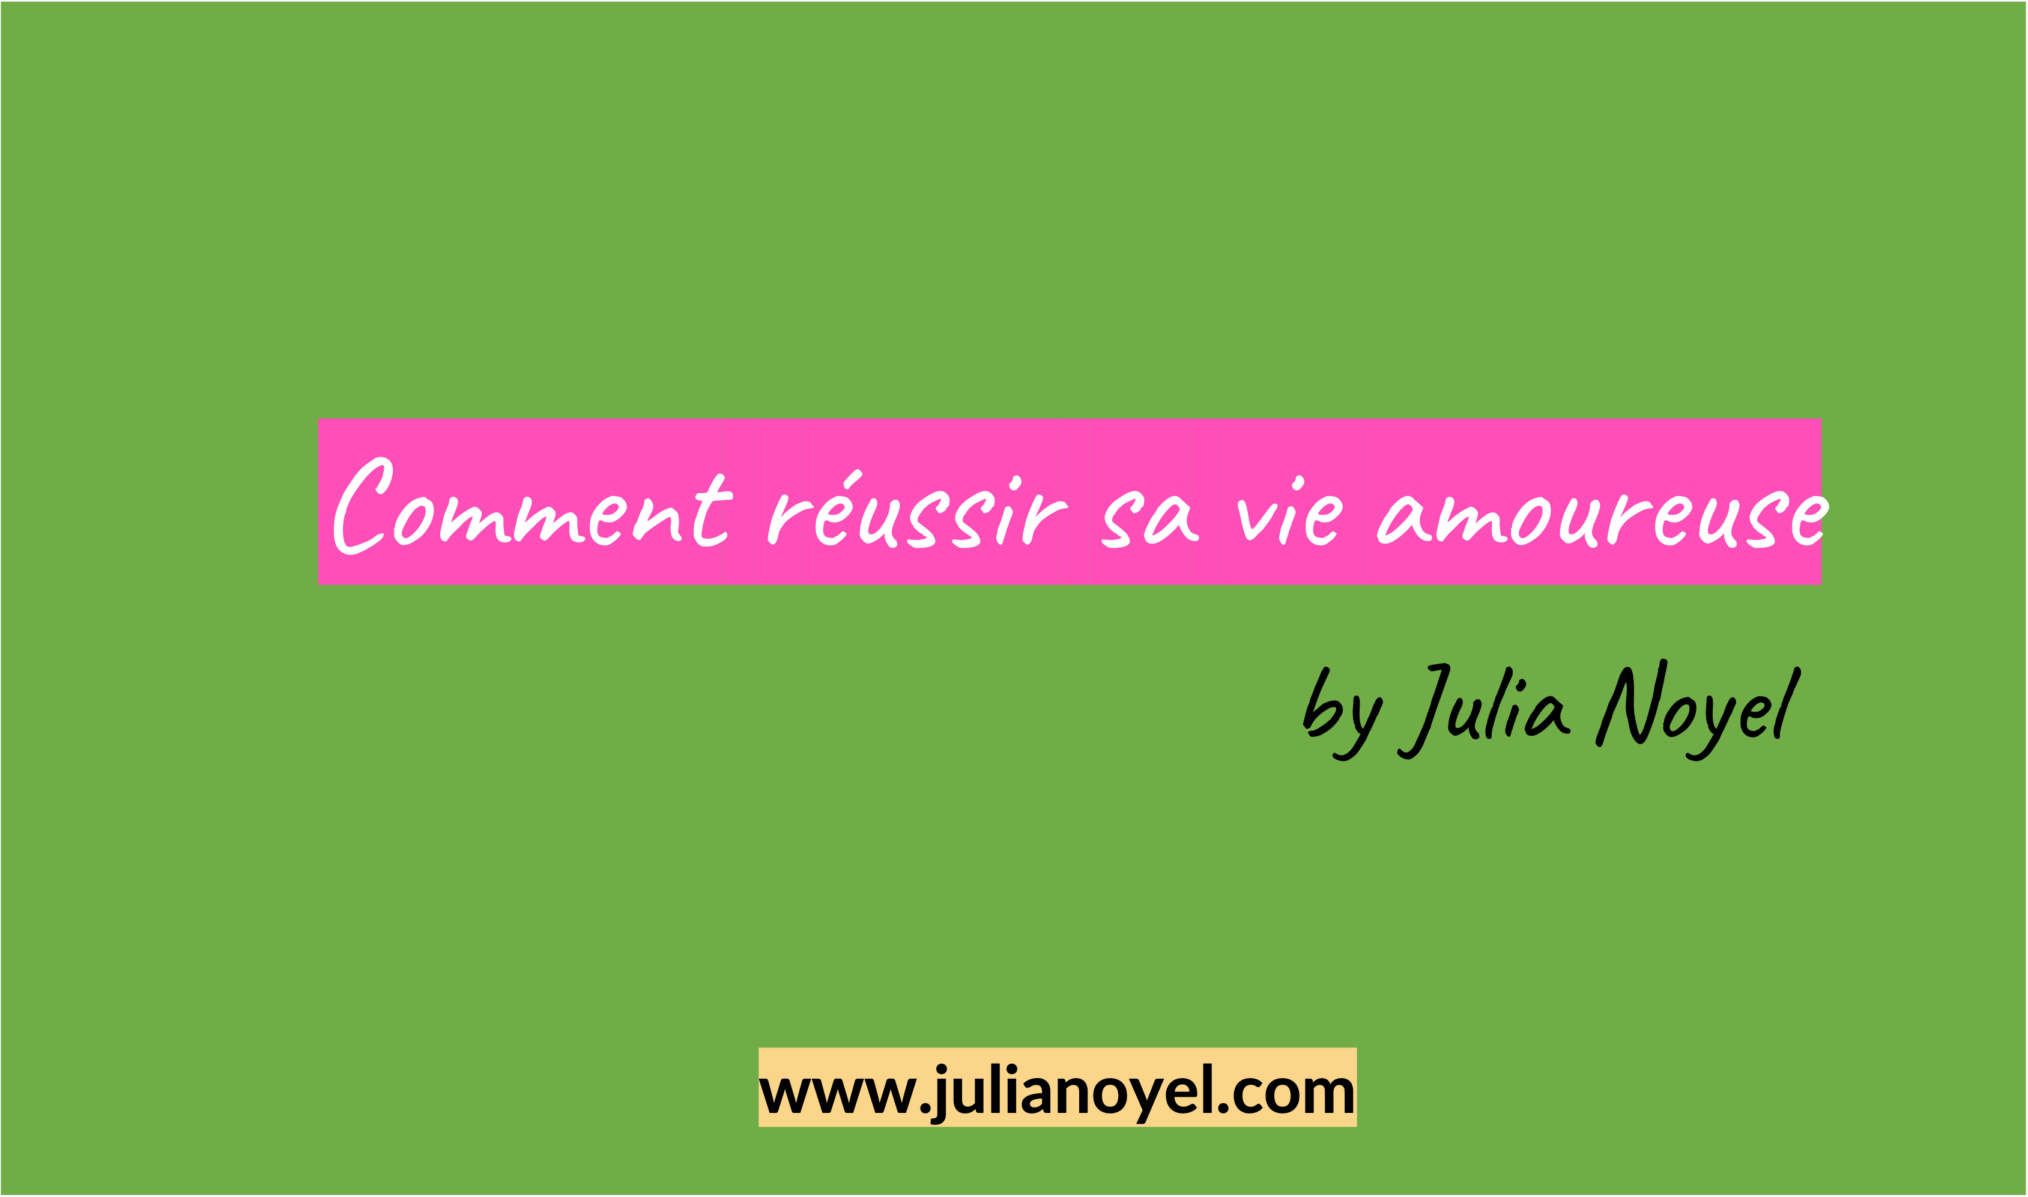 Comment réussir sa vie amoureuse by Julia Noyel